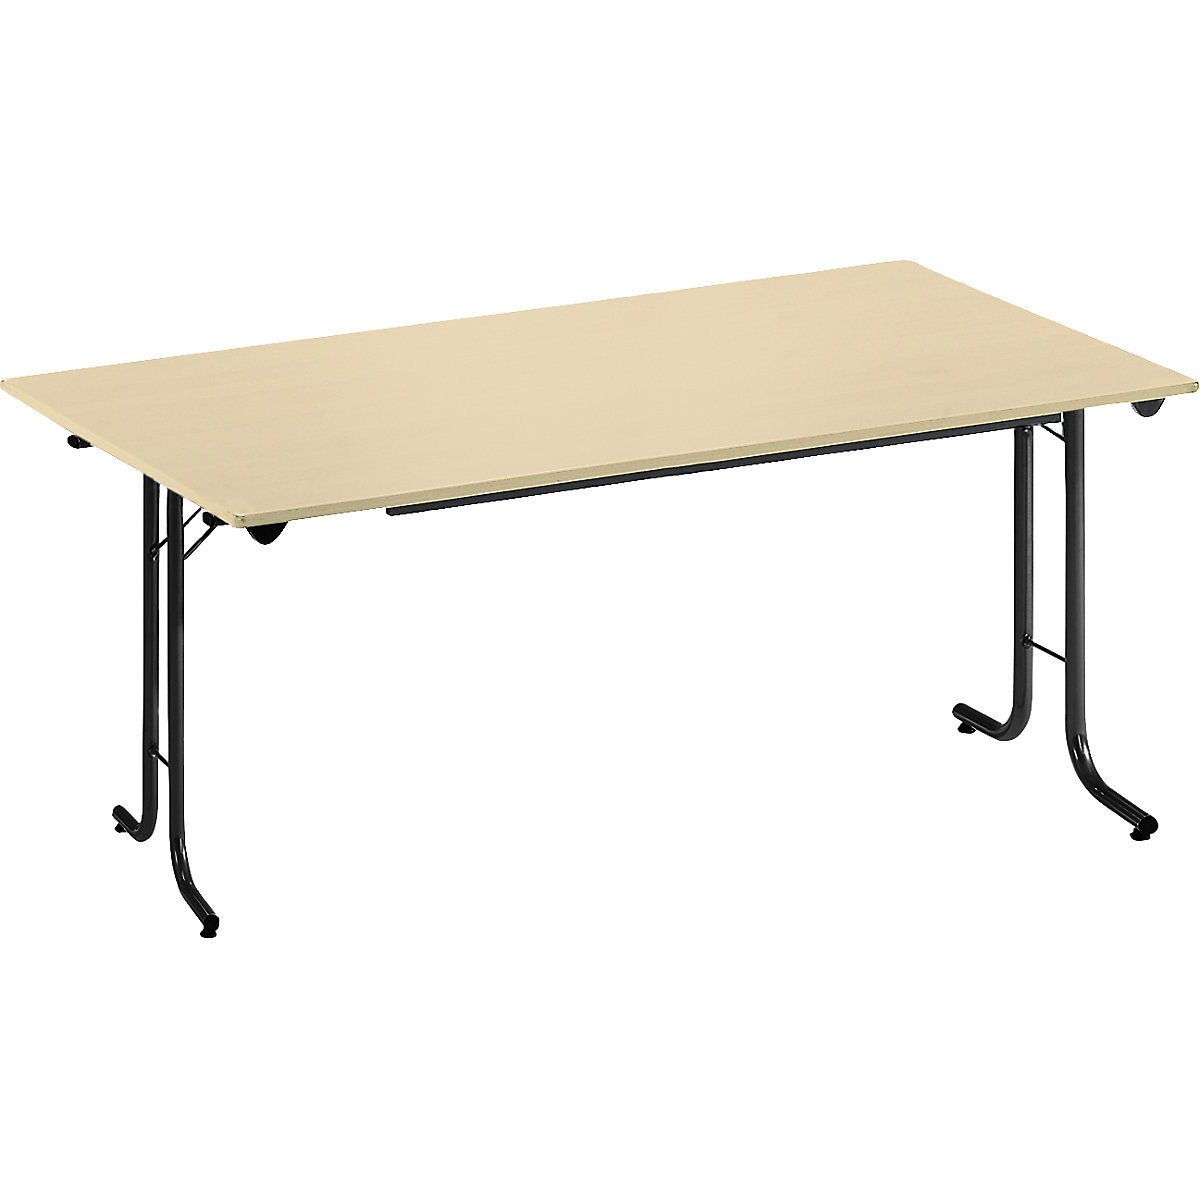 Folding table, with rounded edges, round tubular frame, rectangular top, 1400 x 700 mm, black frame, maple finish tabletop-3